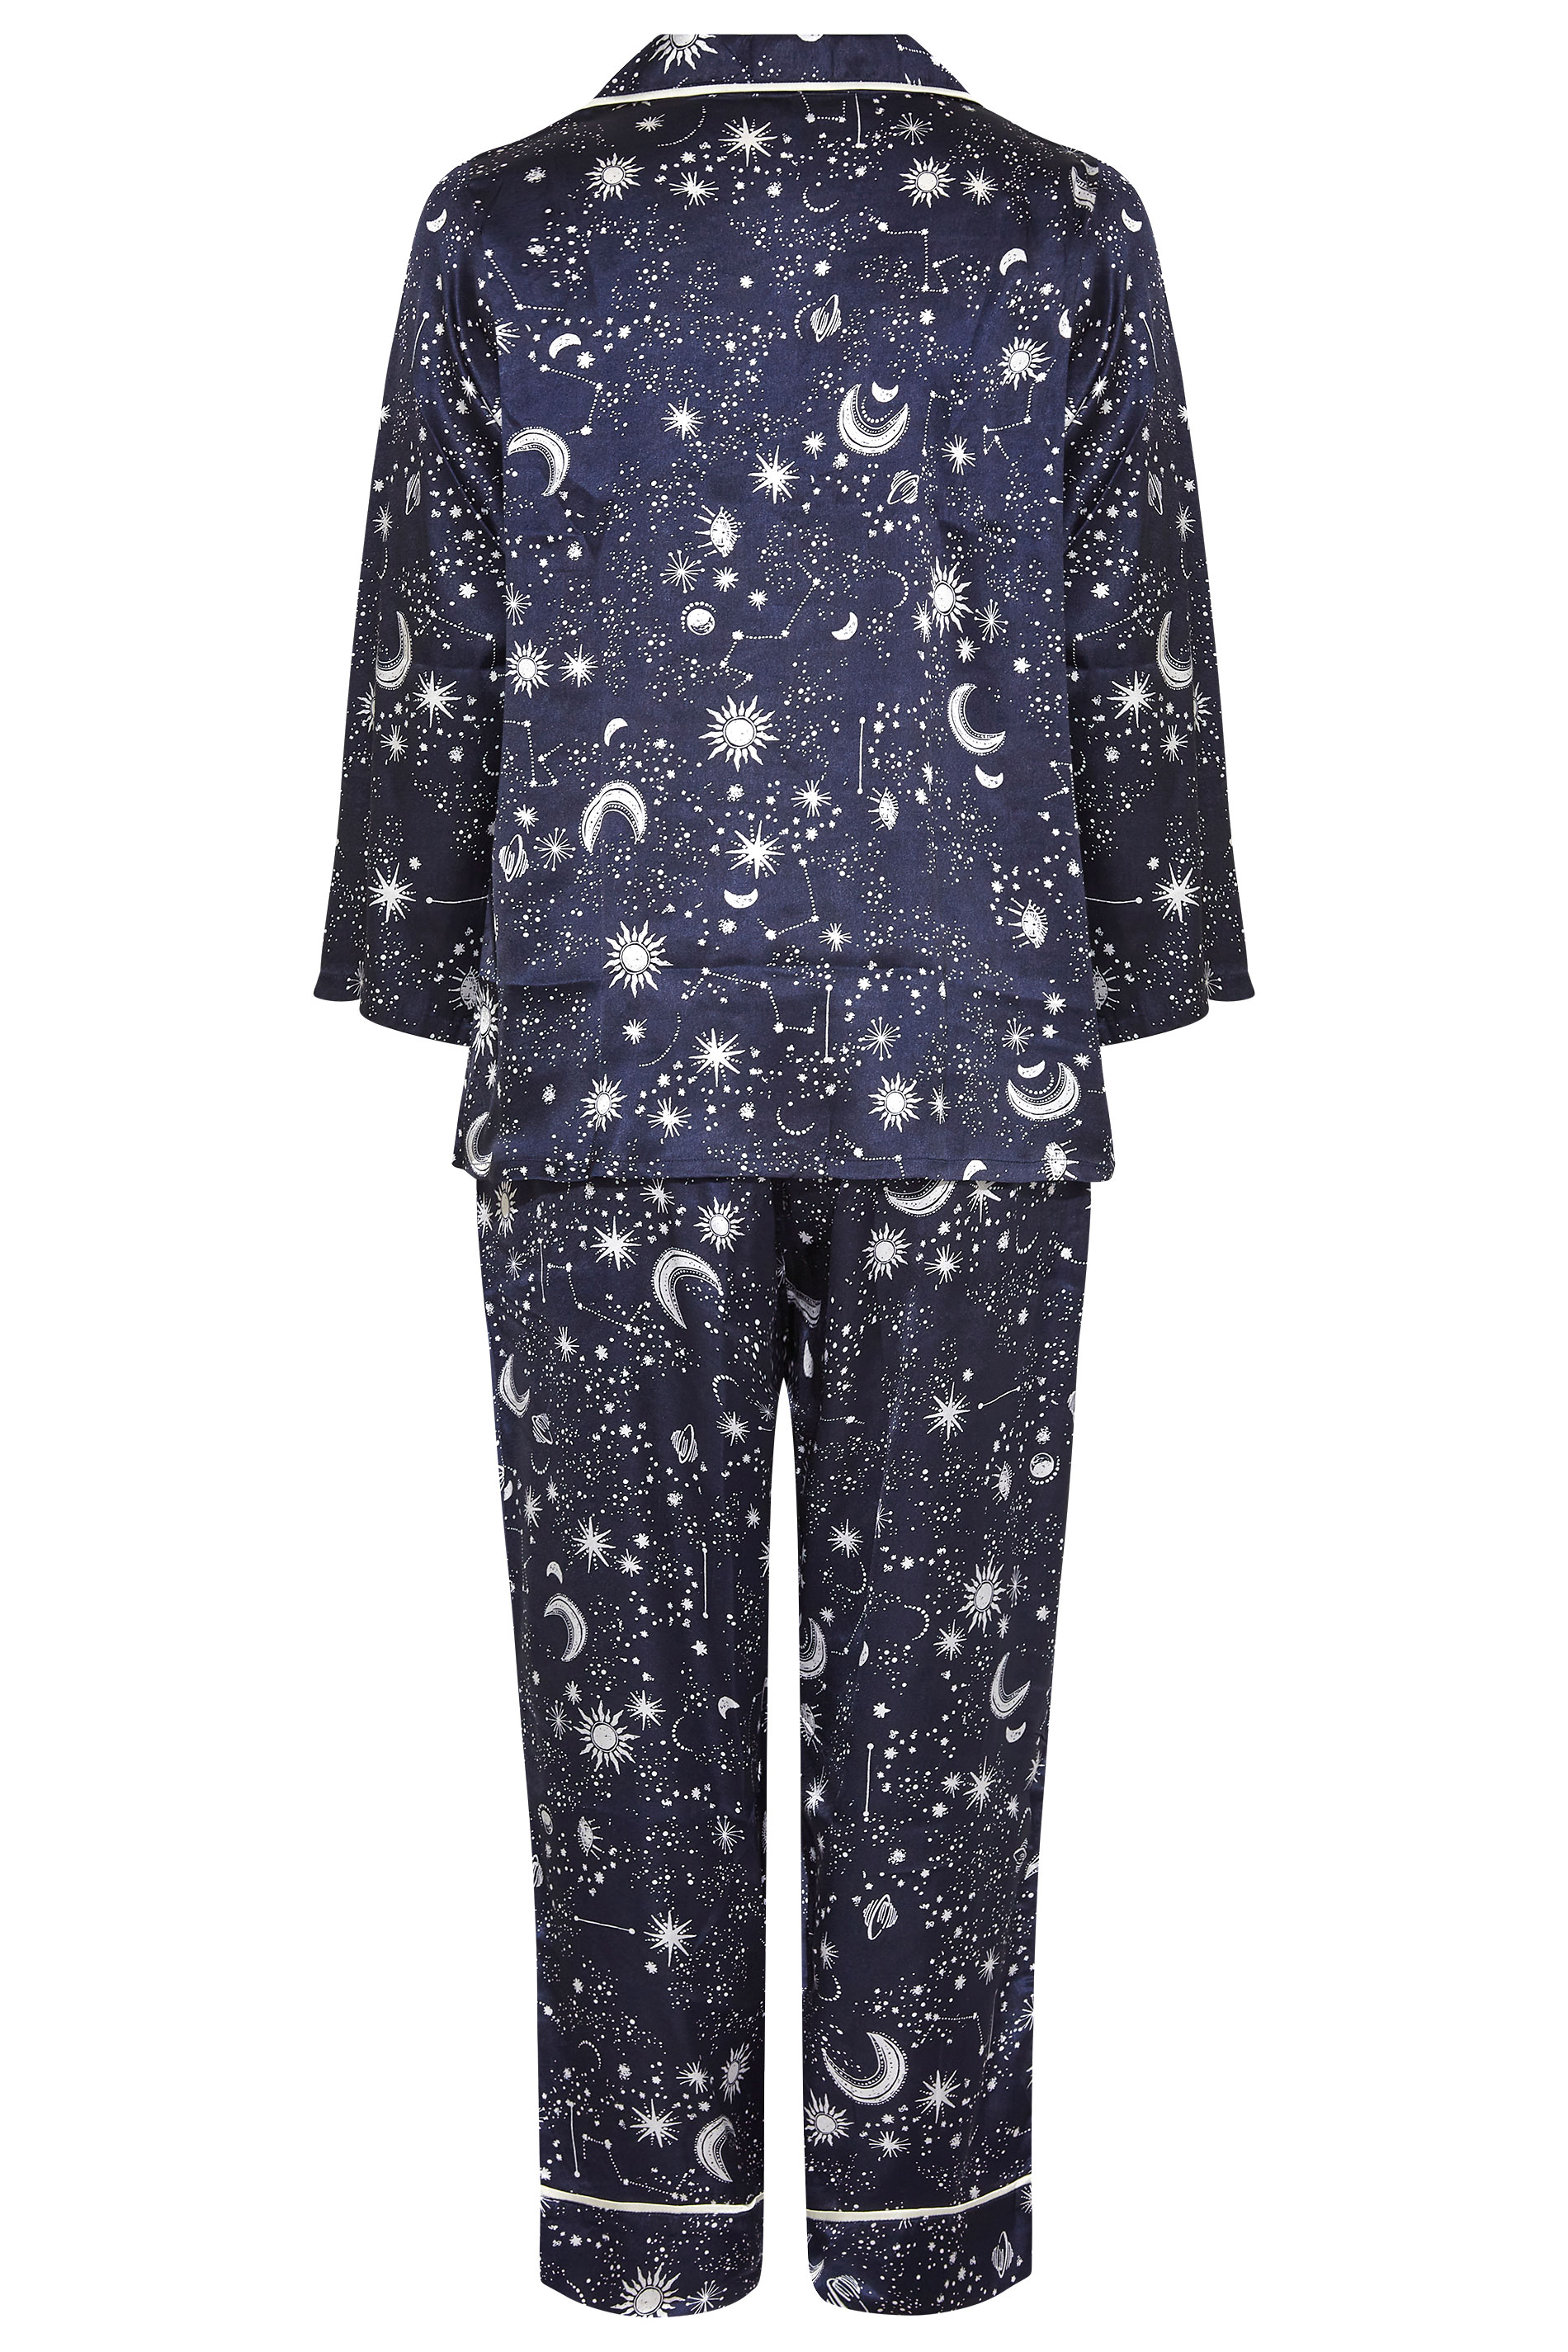 Lijkenhuis Pef kapsel Plus Size Navy Blue Cosmic Print Satin Pyjama Set | Yours Clothing